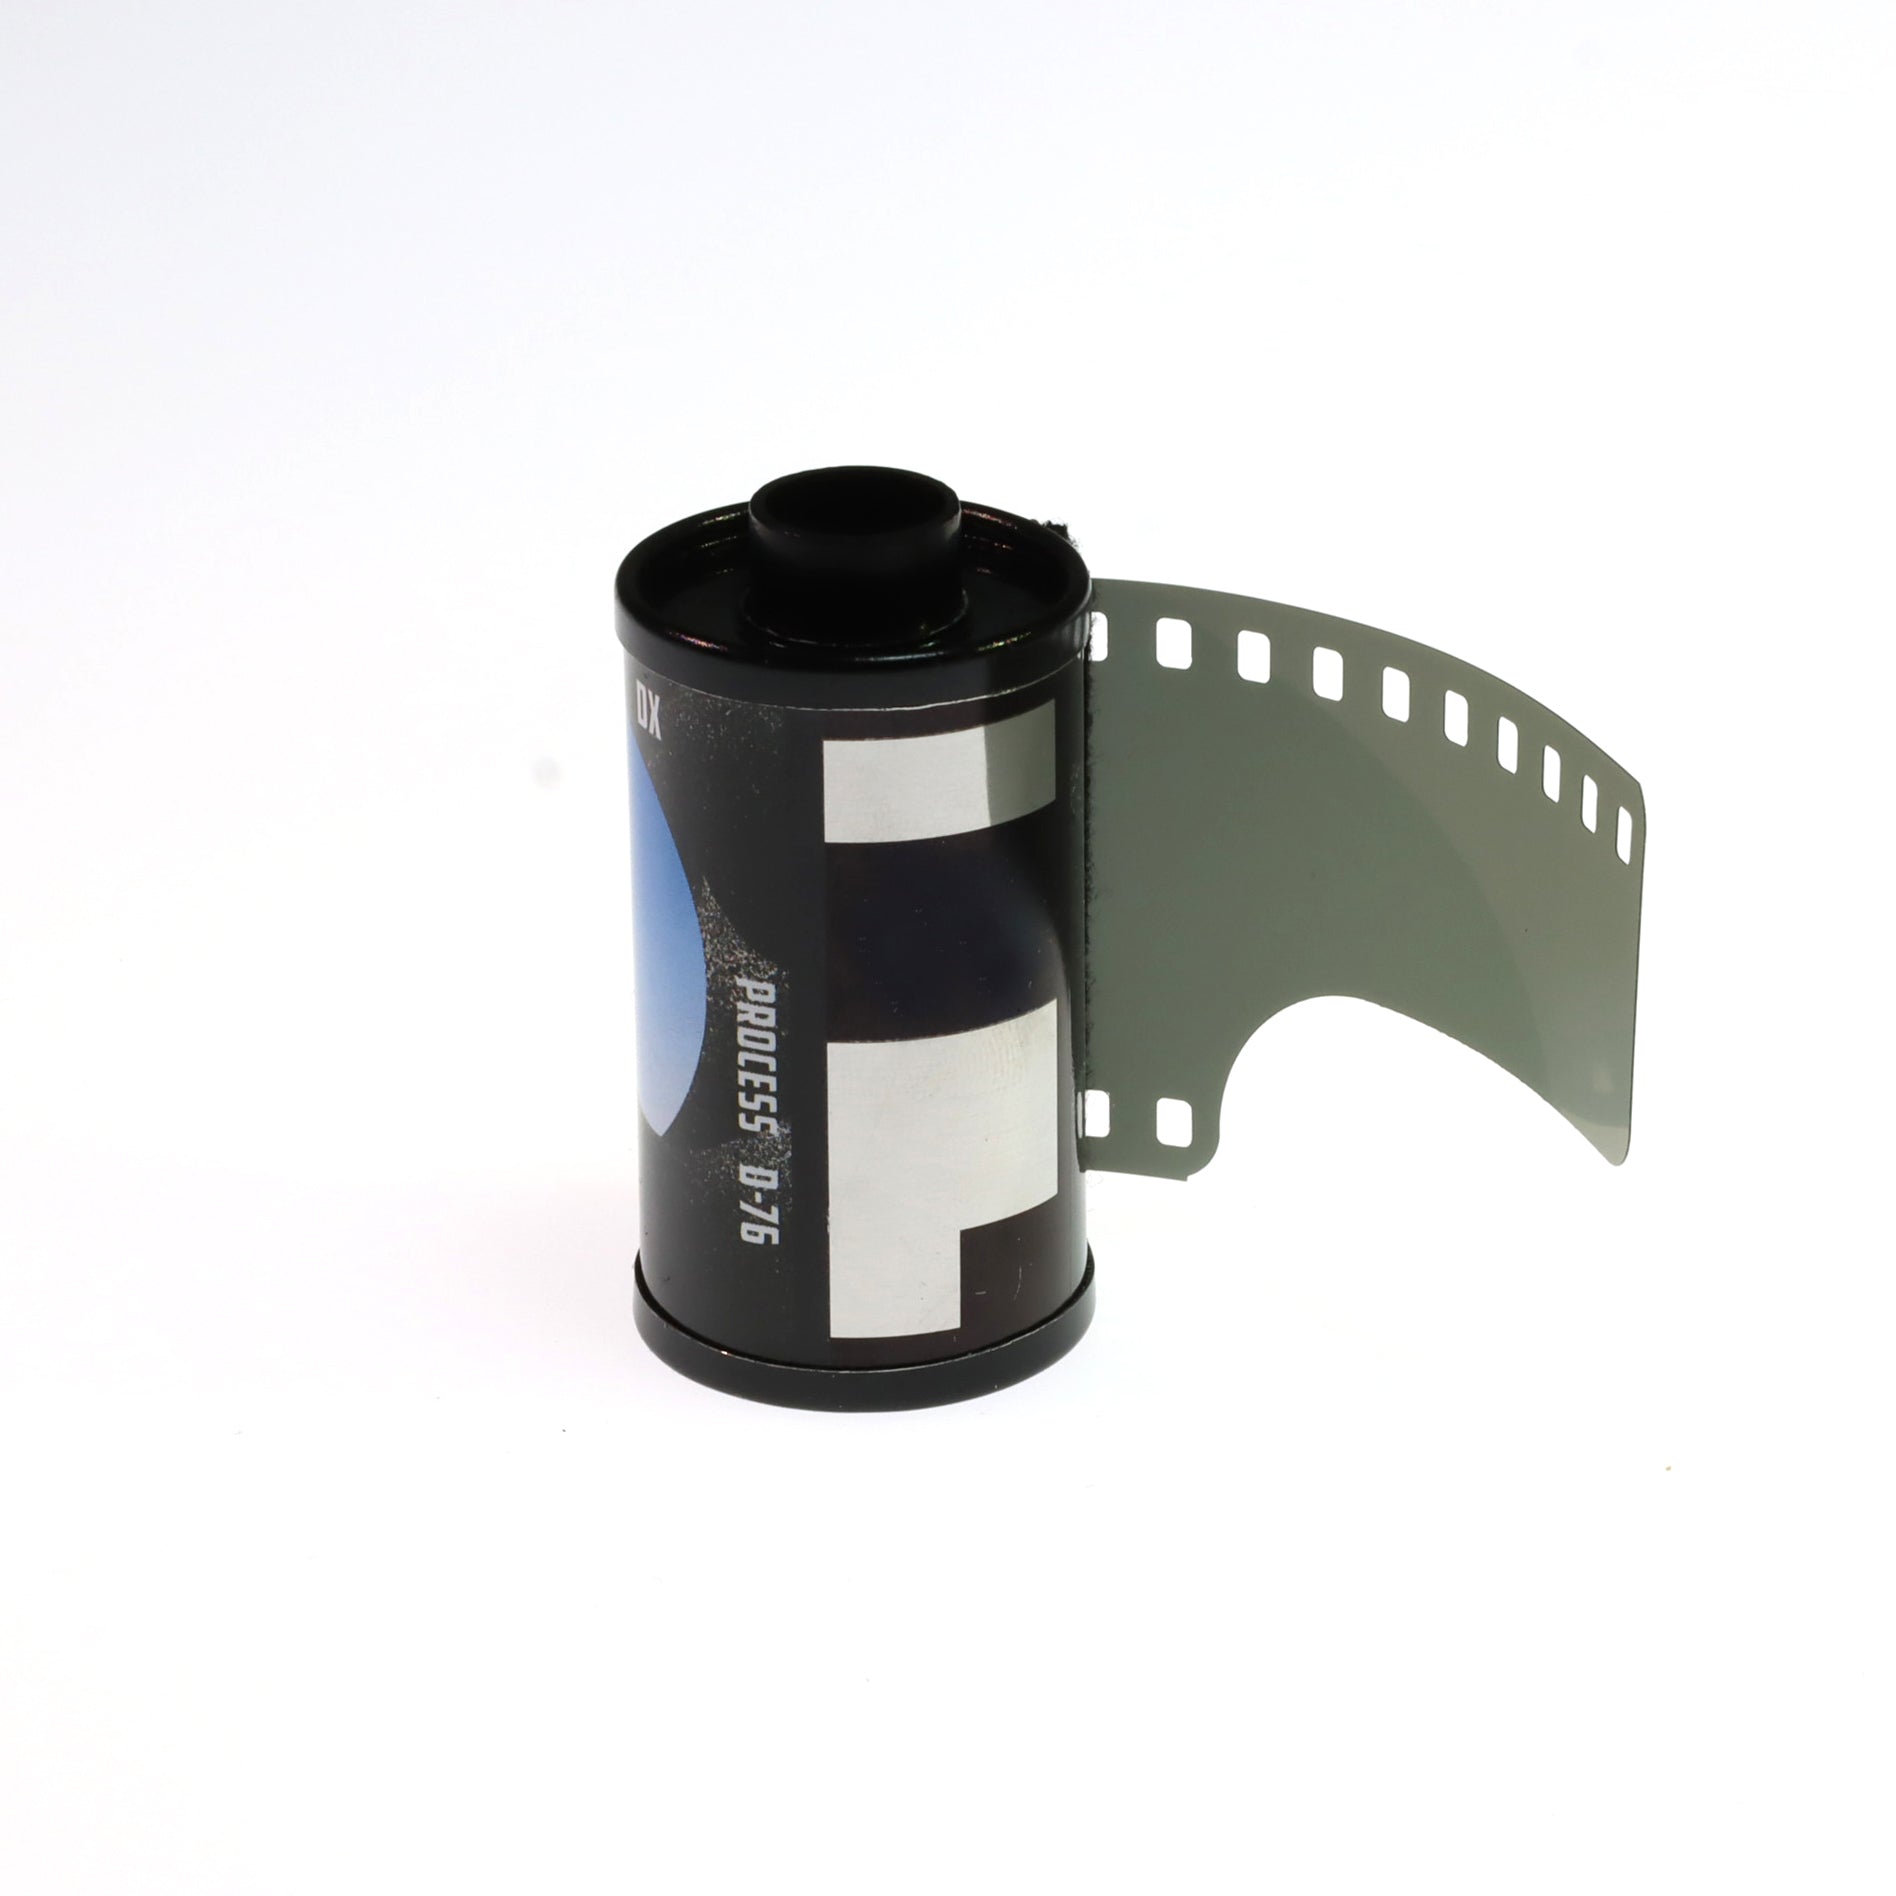 Flic Film UltraPan 400 (35mm Roll Film, 36 Exposures) FF00878F